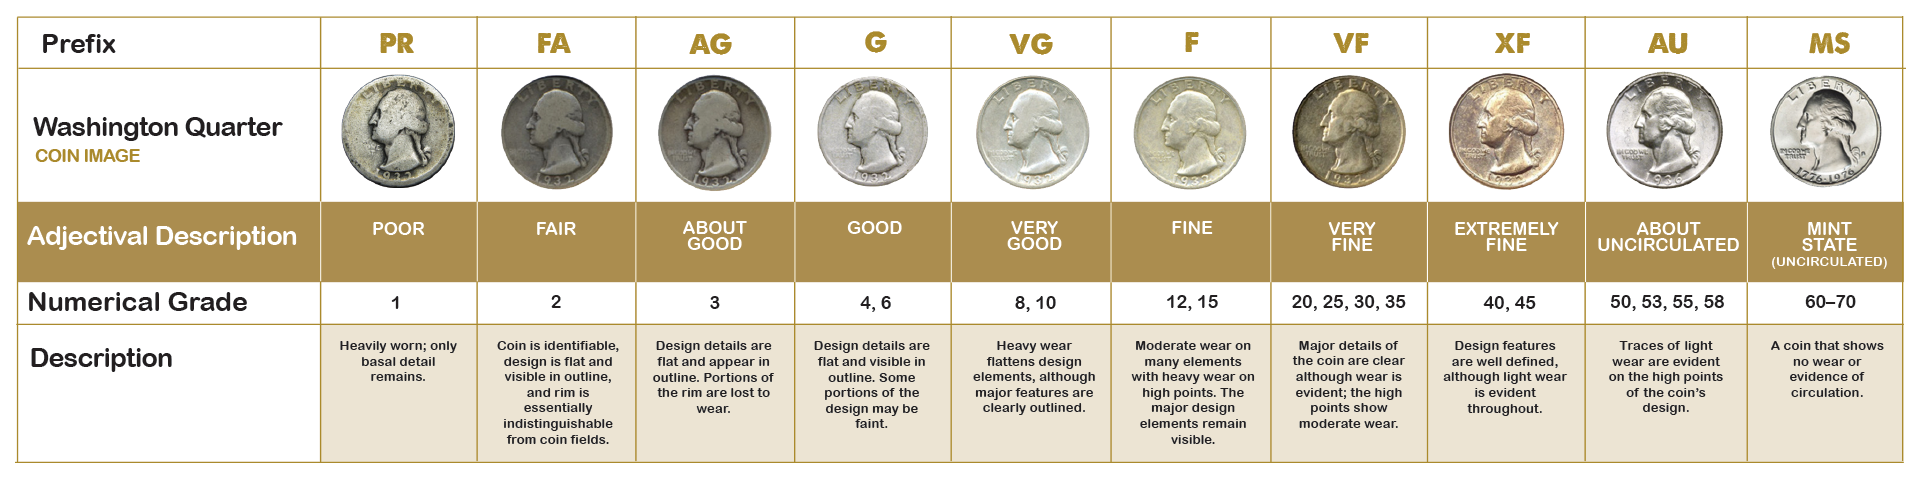 Sheldon coin grading scale - Wikipedia